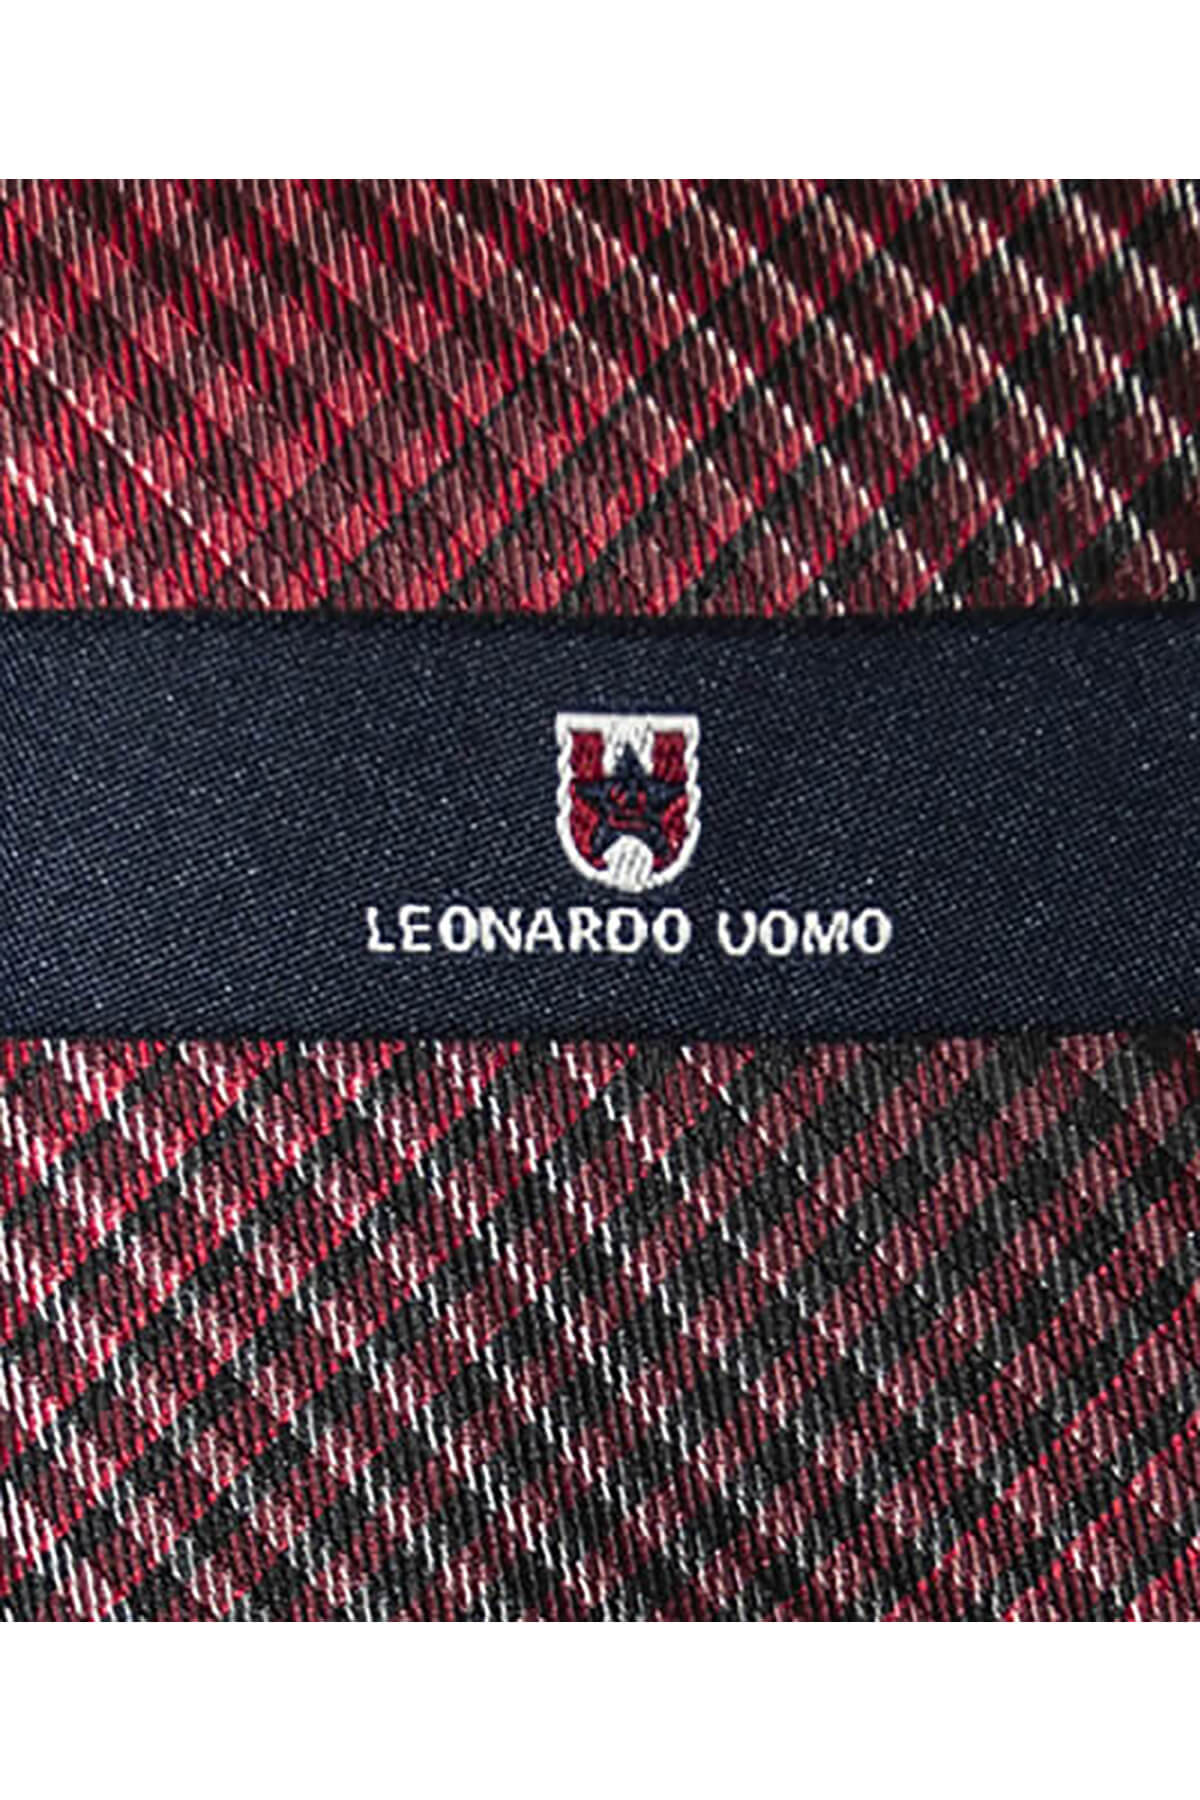 Leonardo Uomo Tie With Pocket Square